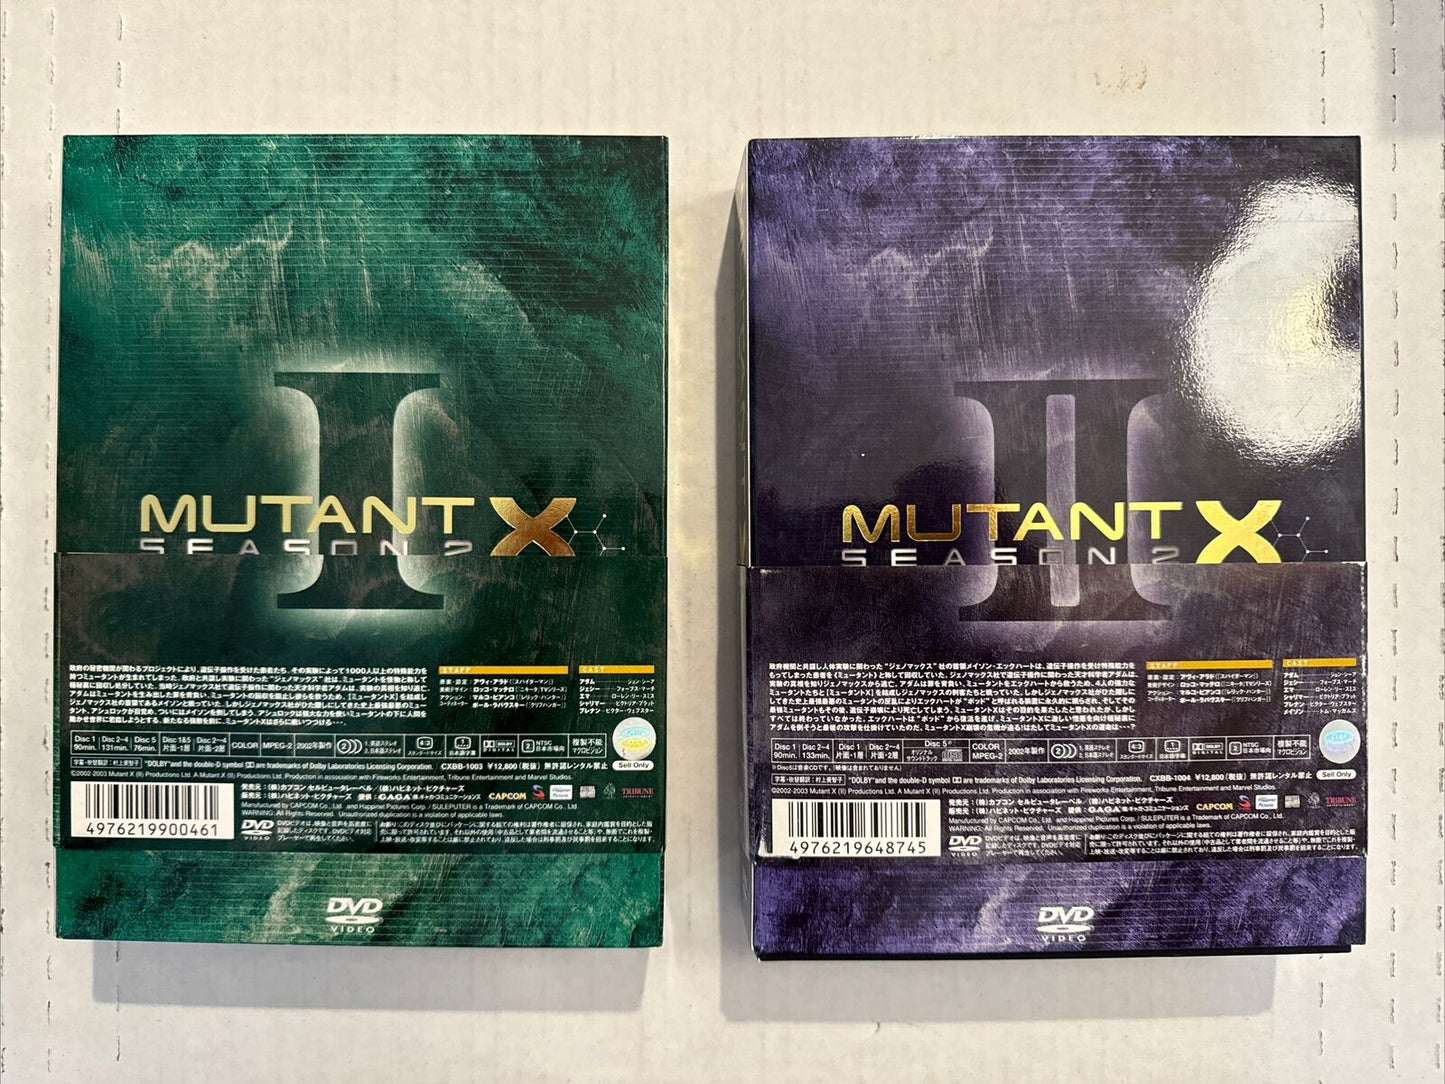 Mutant X Season 2 Vol 1-2 DVD R2 Japan Import 10 Disc